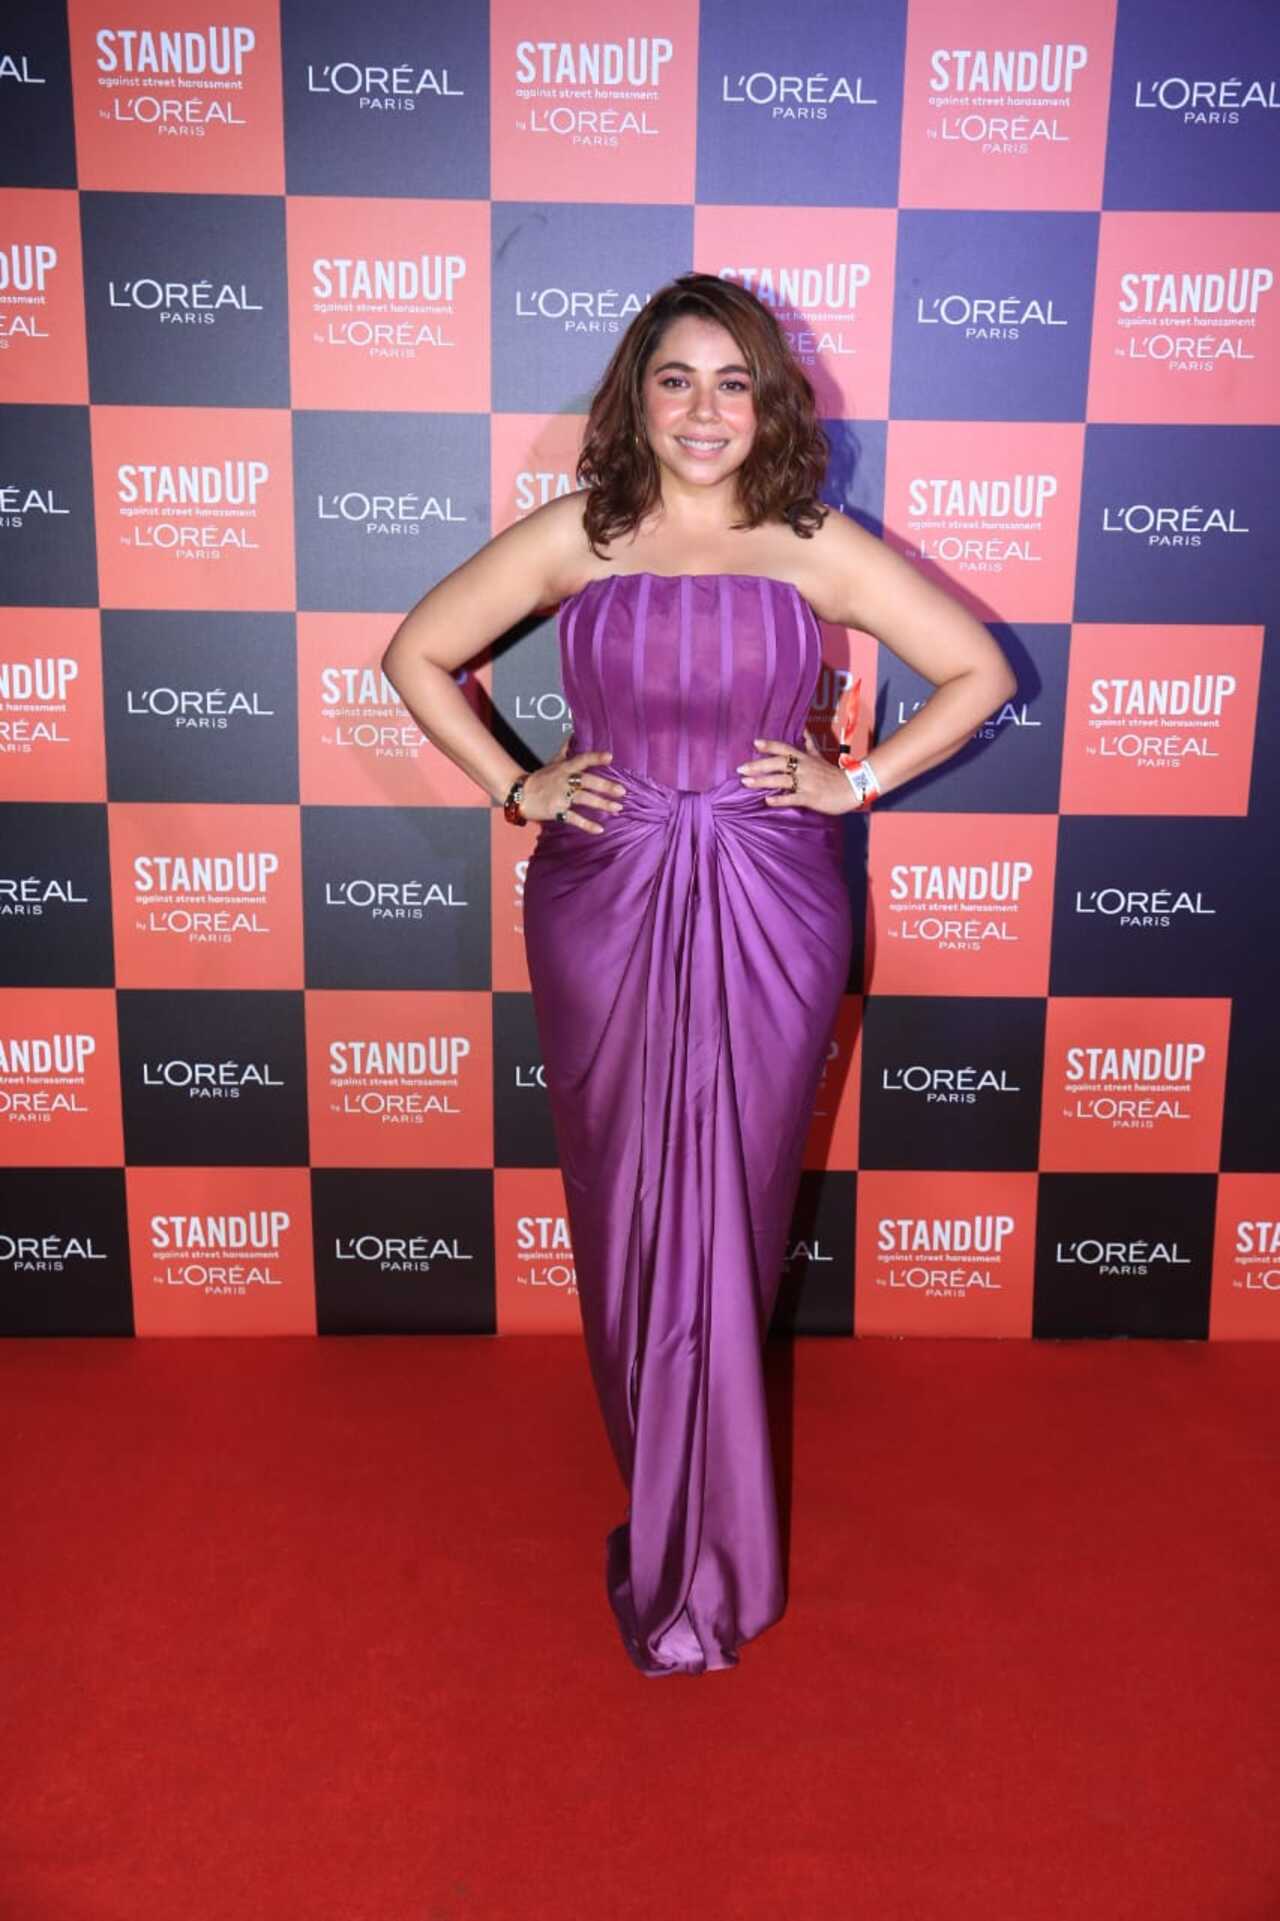 Maanvi Gagroo sparkled in a lavender coloured off-shoulder gown